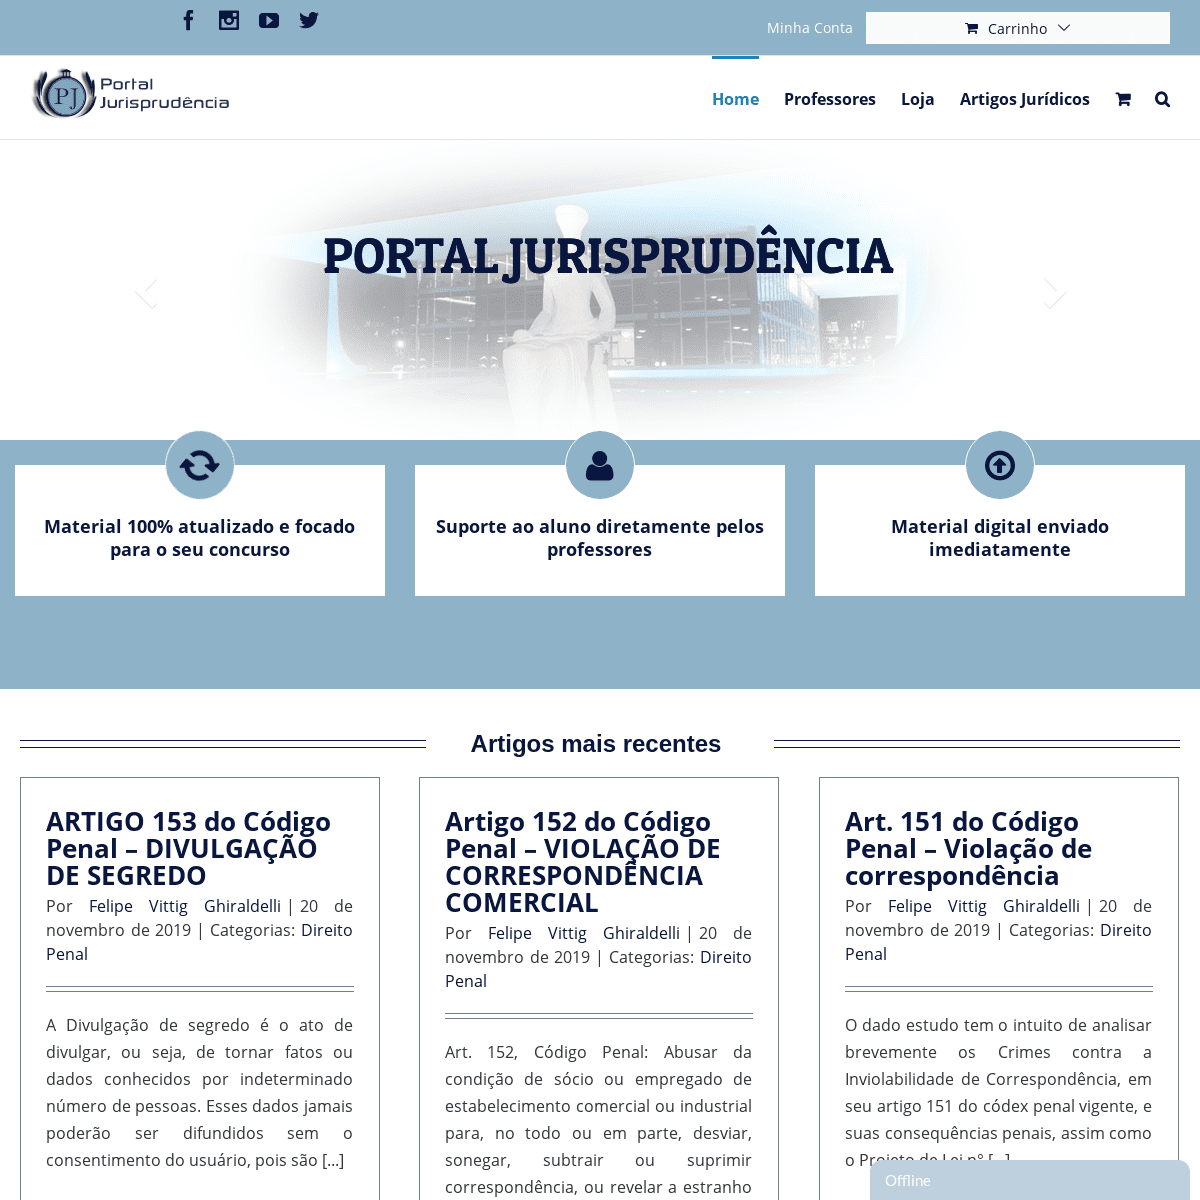 A complete backup of portaljurisprudencia.com.br